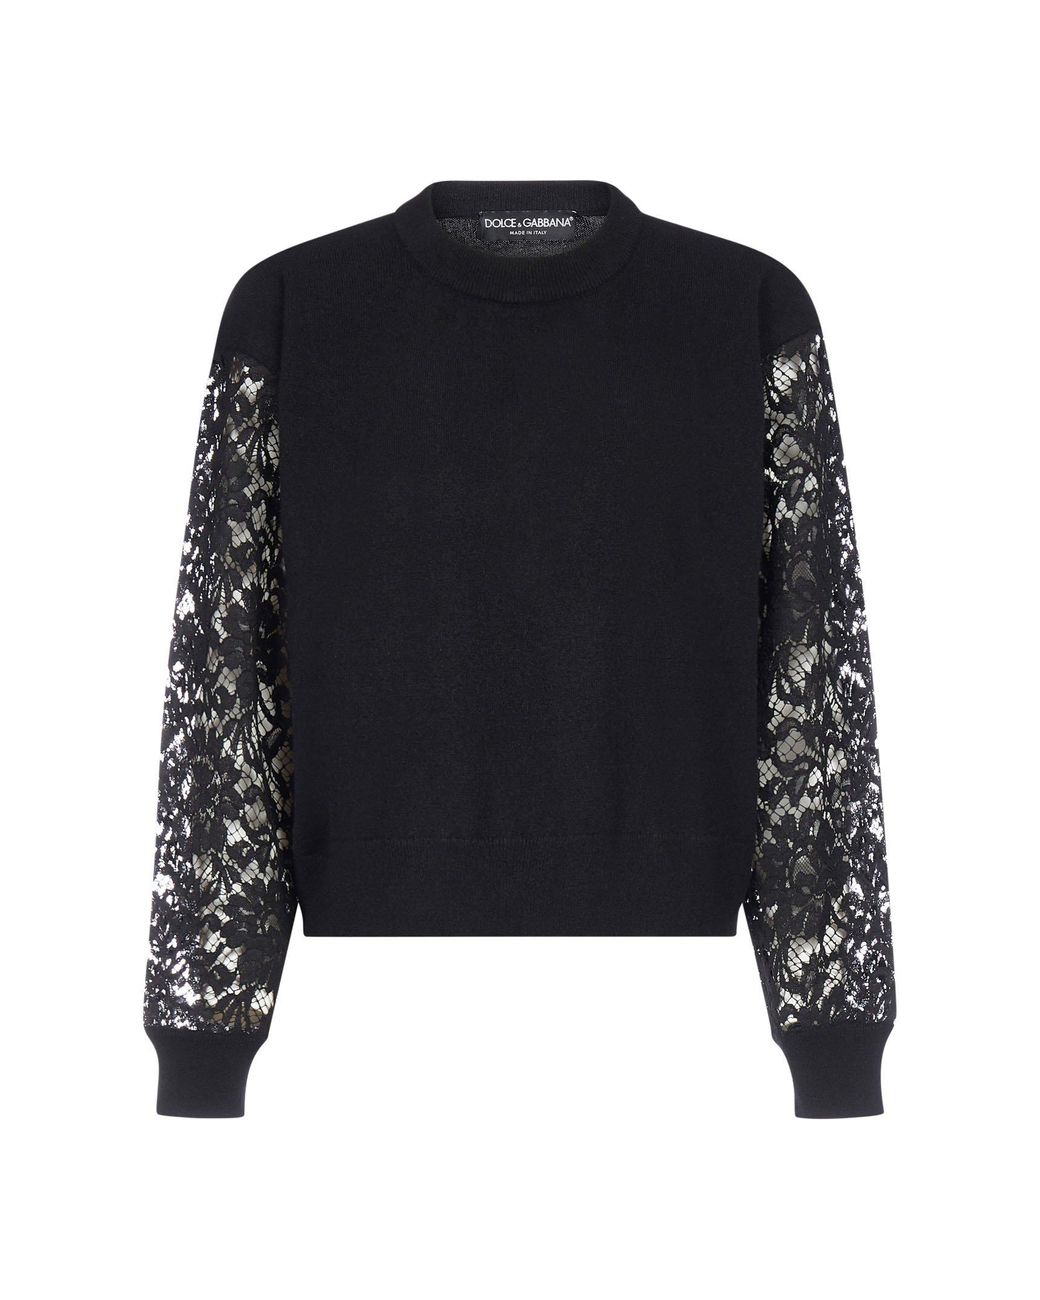 Dolce & Gabbana Lace Sleeve Sweater in Black - Lyst